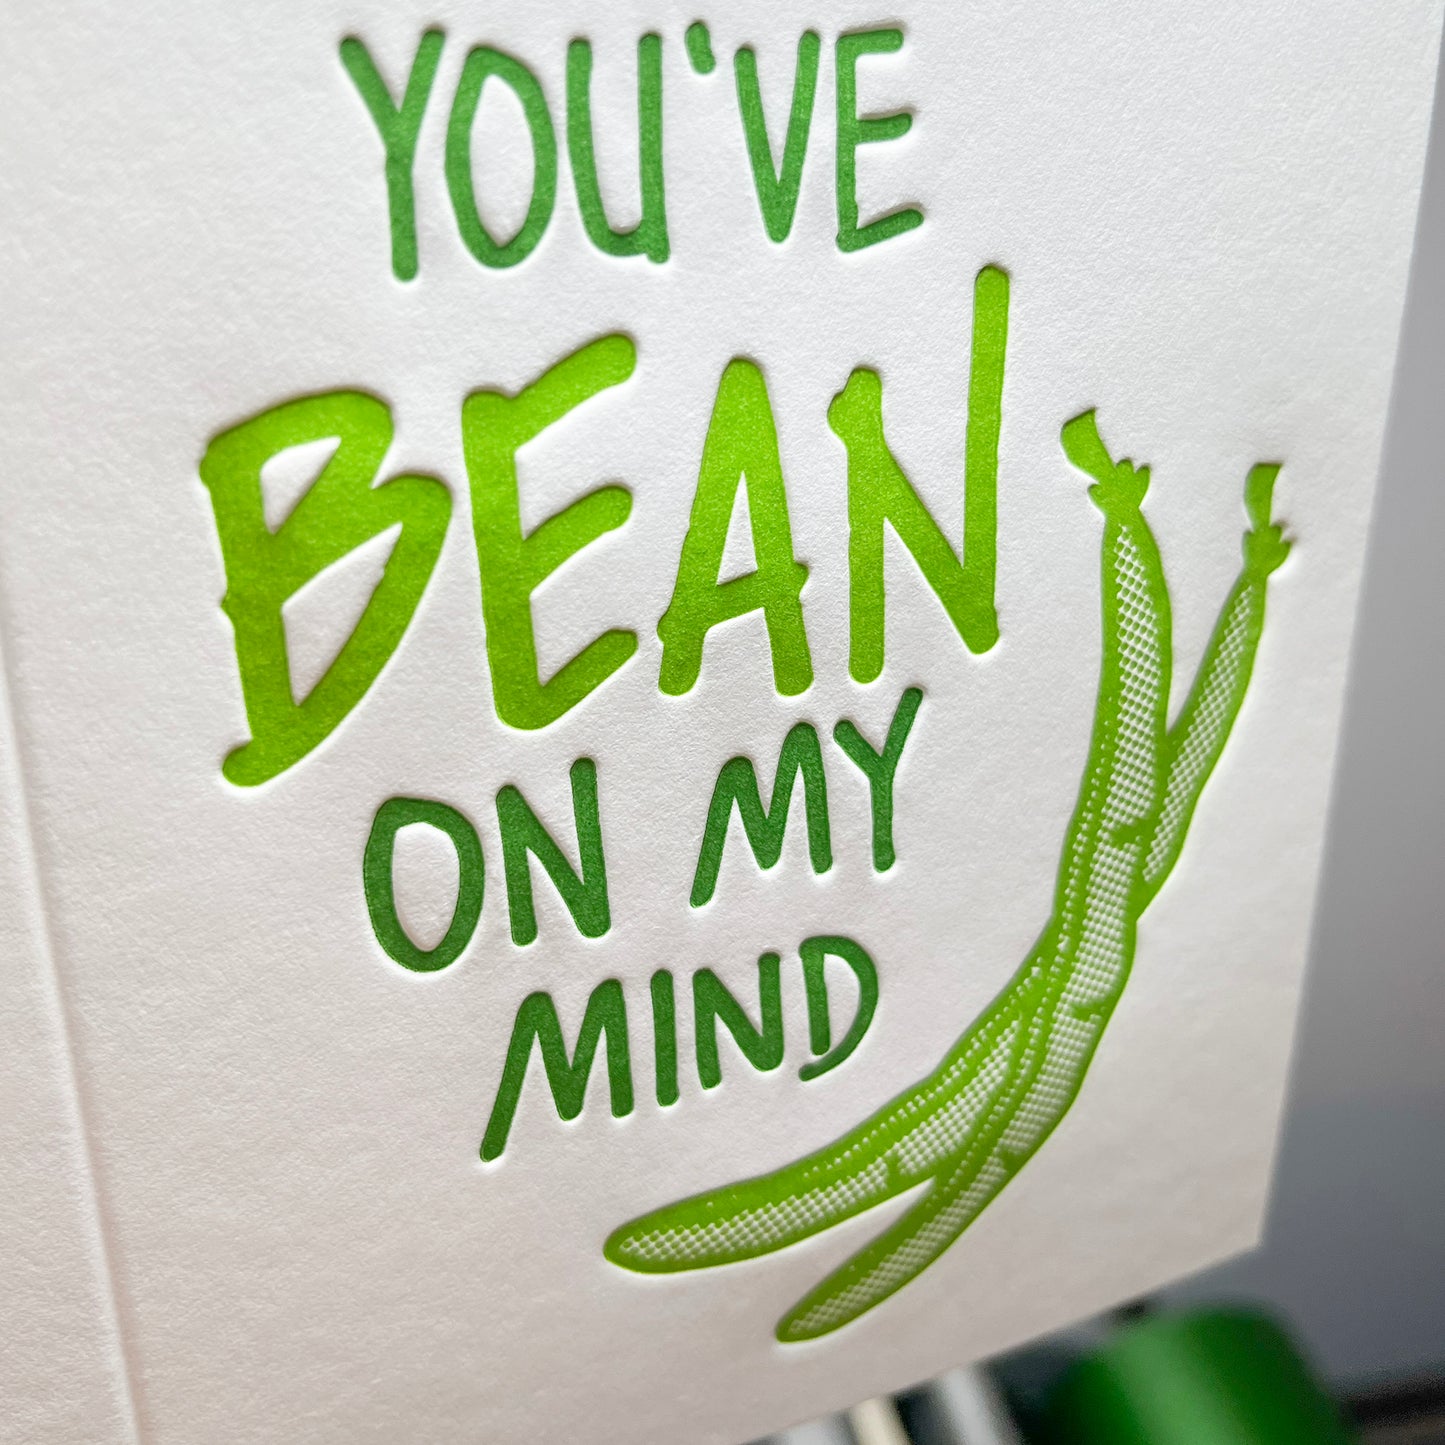 Green Bean Love Letterpress Card